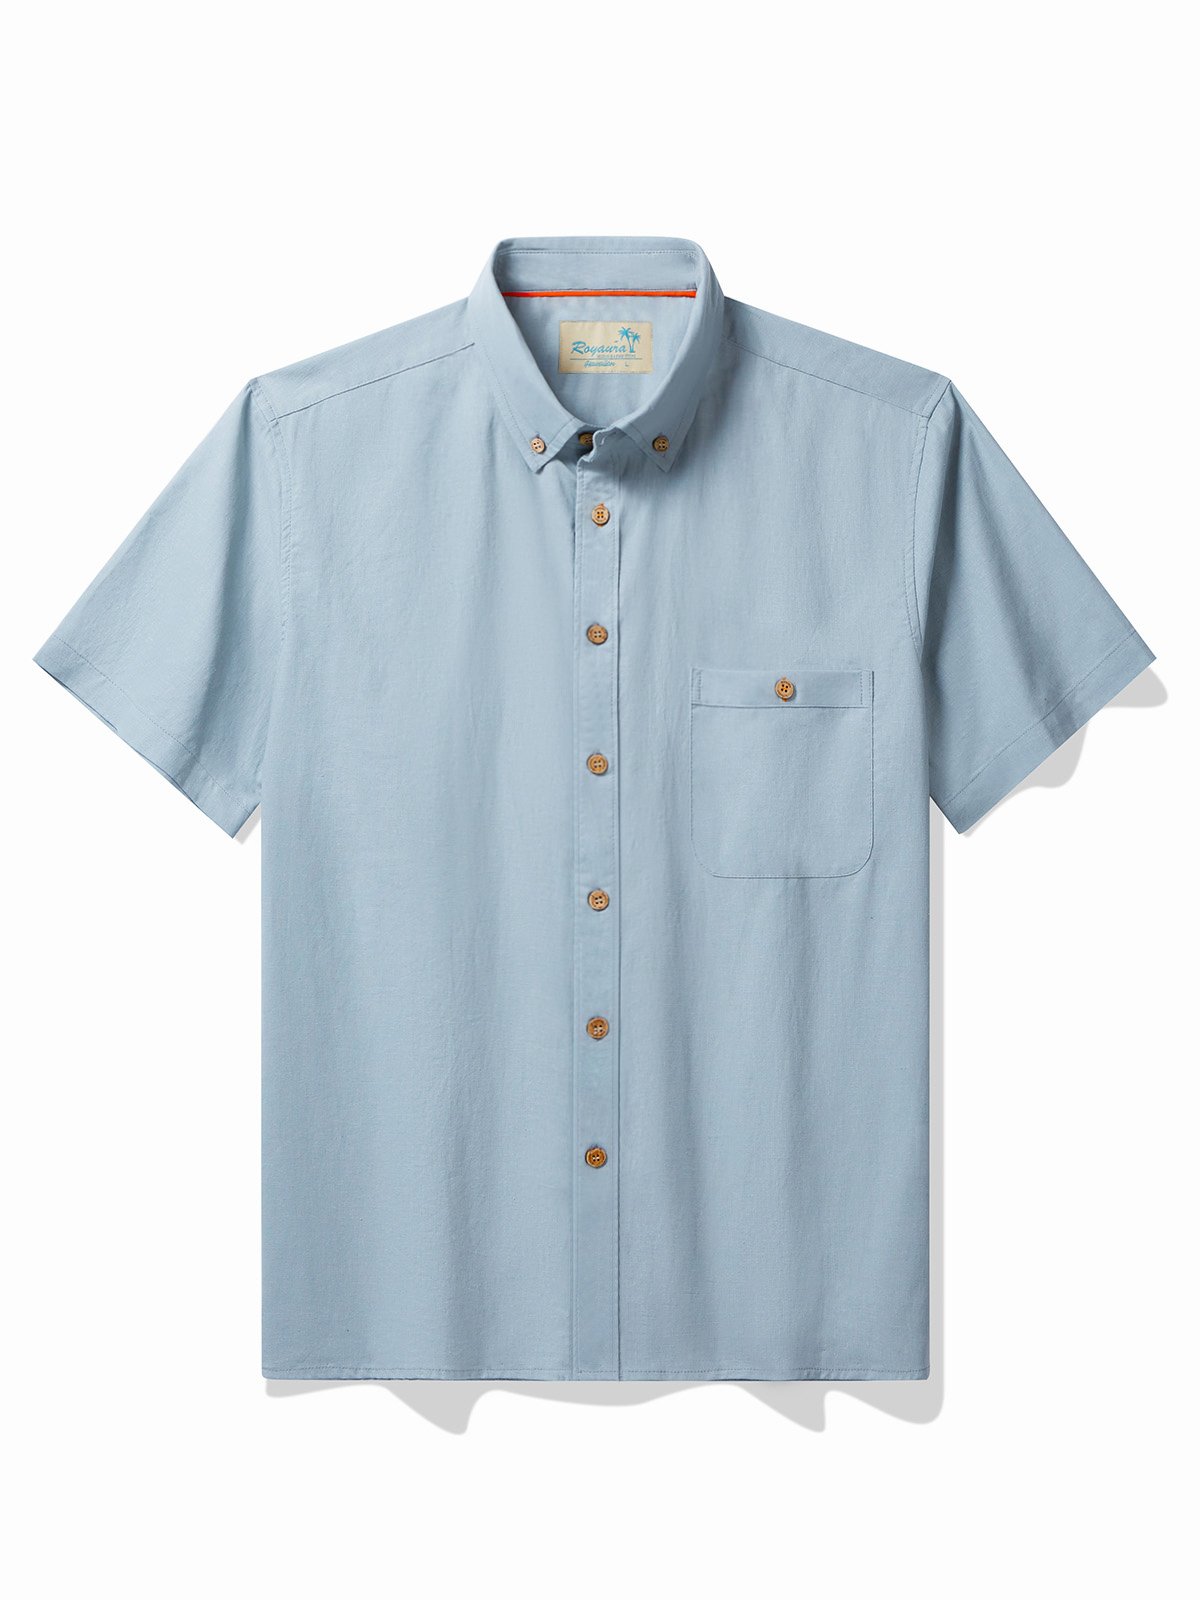 Royaura® Cotton Linen Men's Camp Shirt Breathable Comfort Pocket Beach Vacation Shirt Big Tall